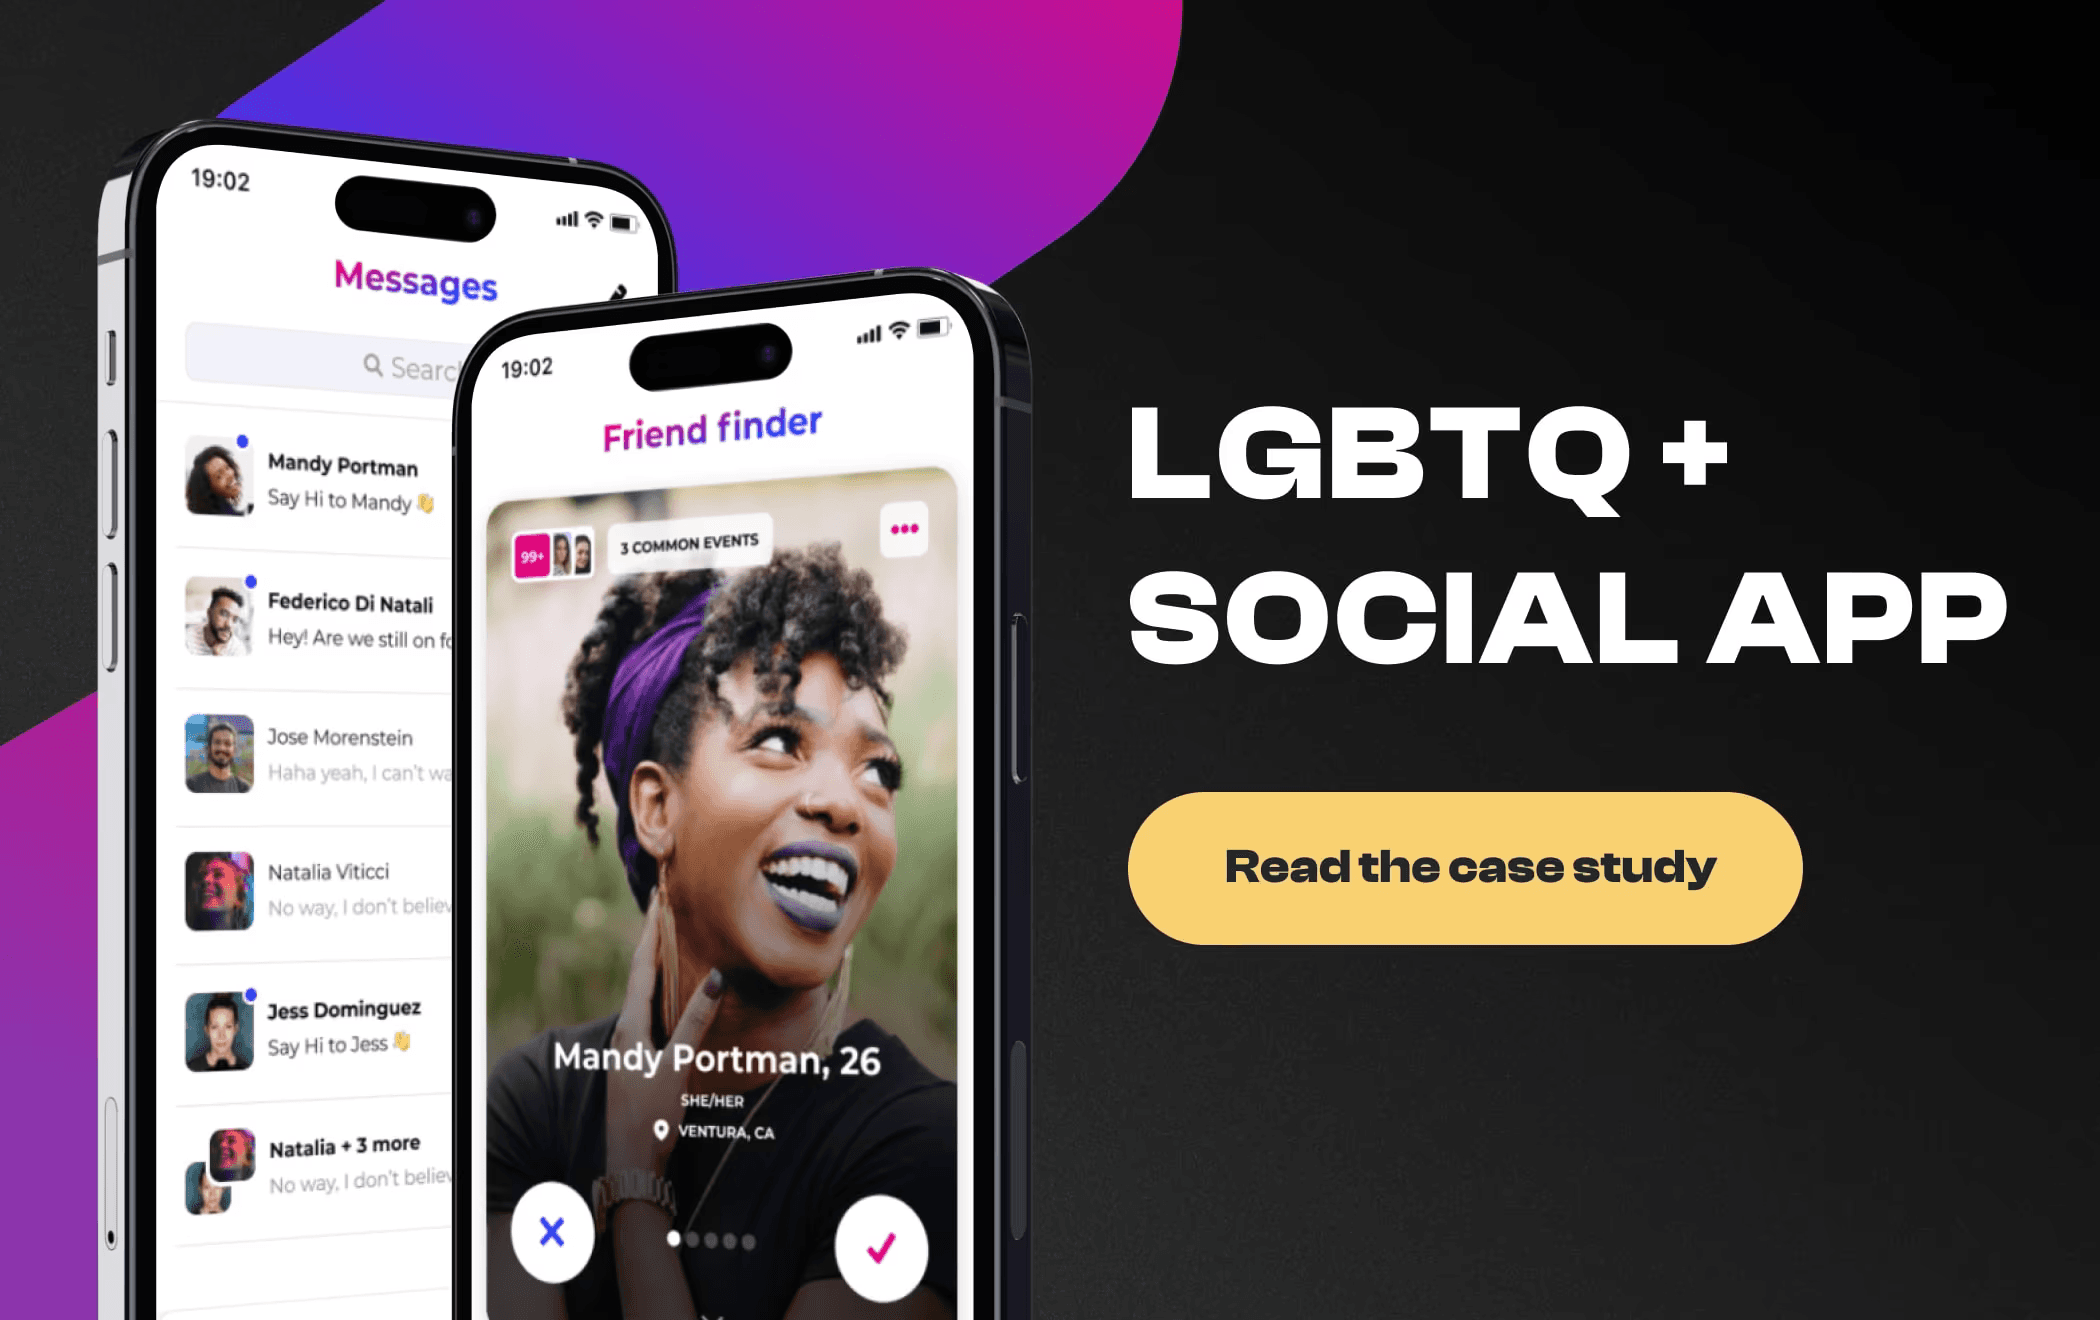 LGBTQ+ Social App Case Study